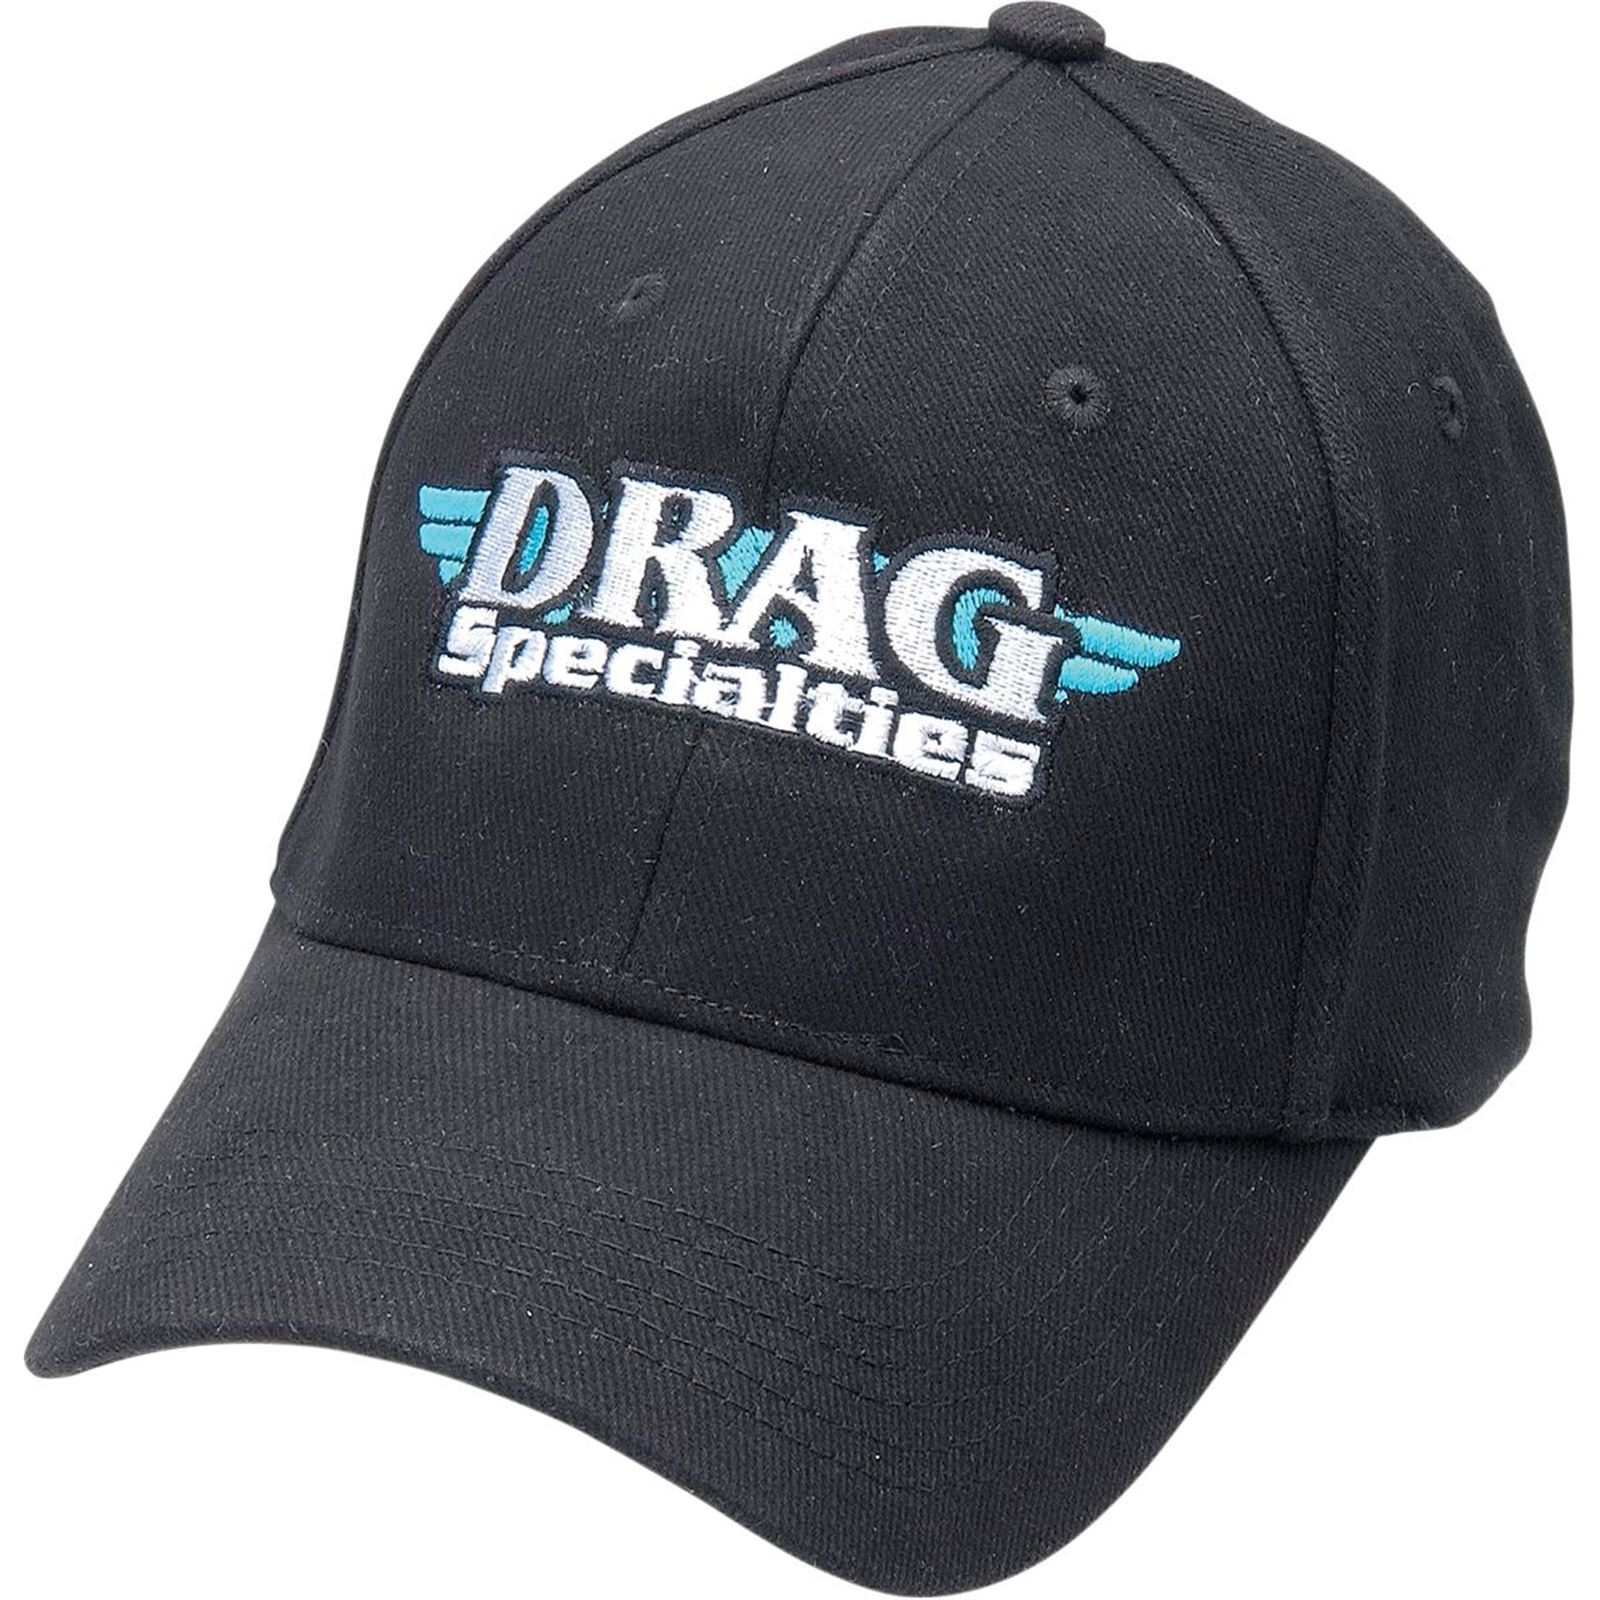 Drag Specialties Snapback Hat - Black